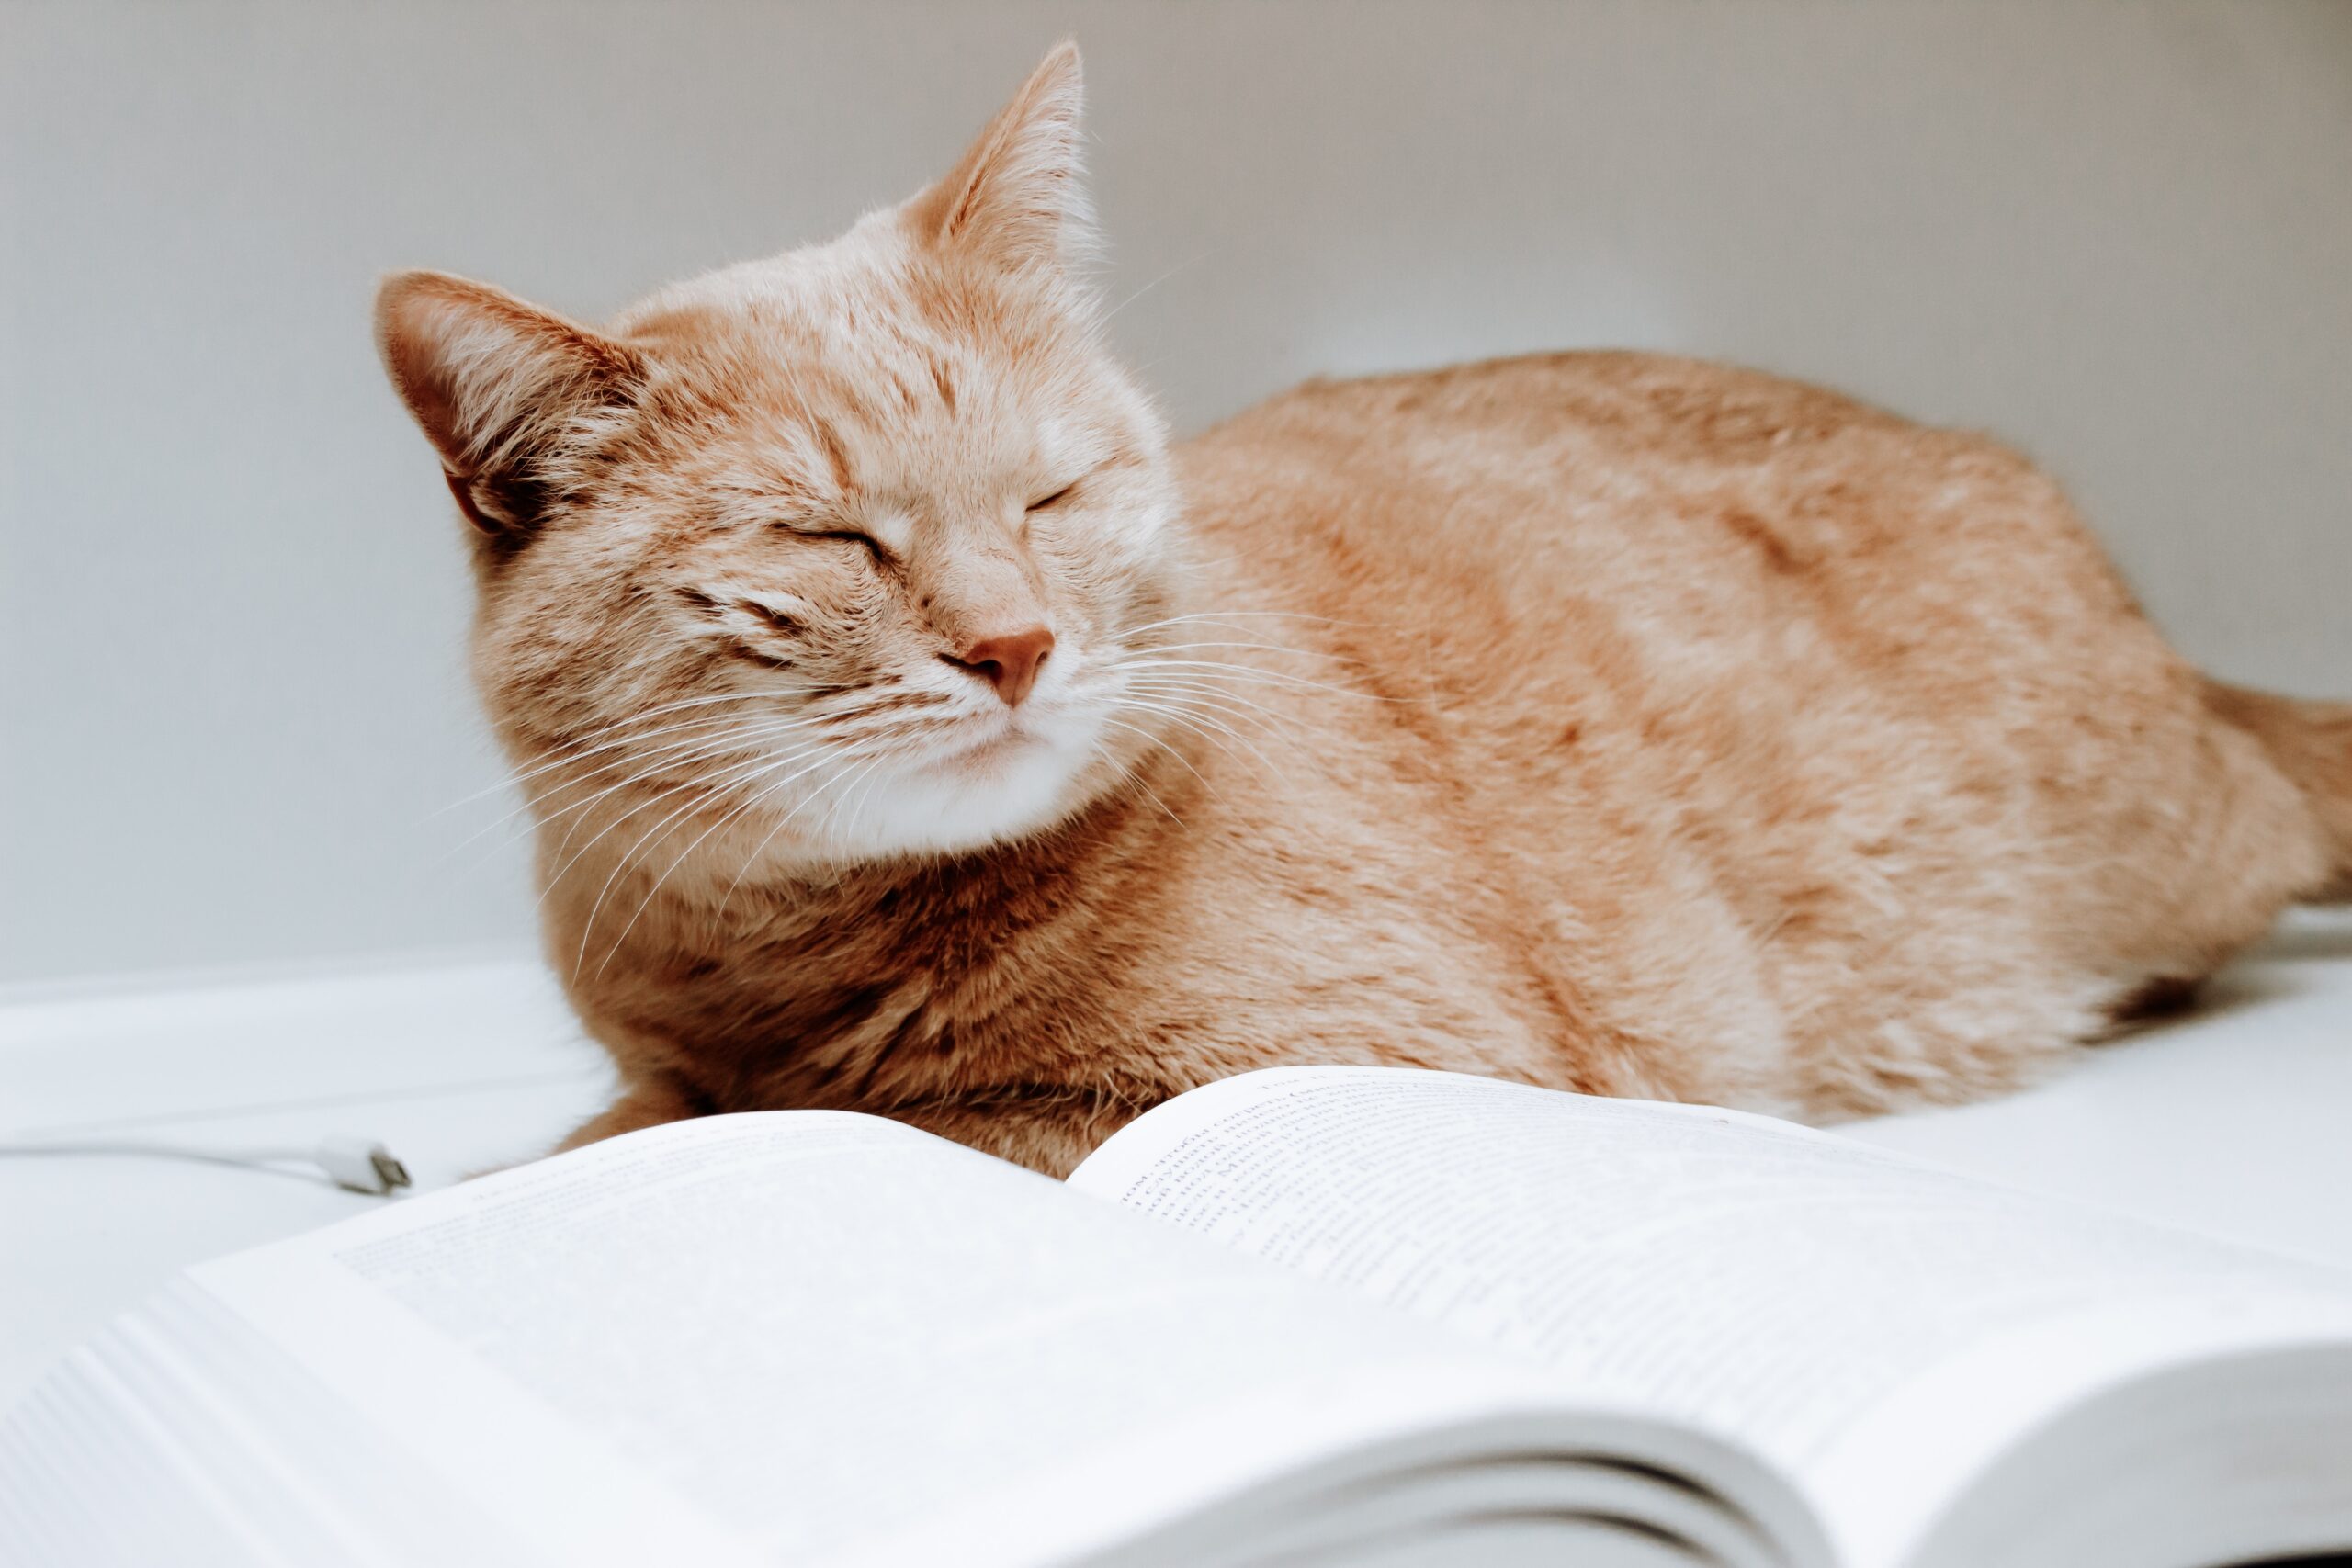 cat snoozing near book